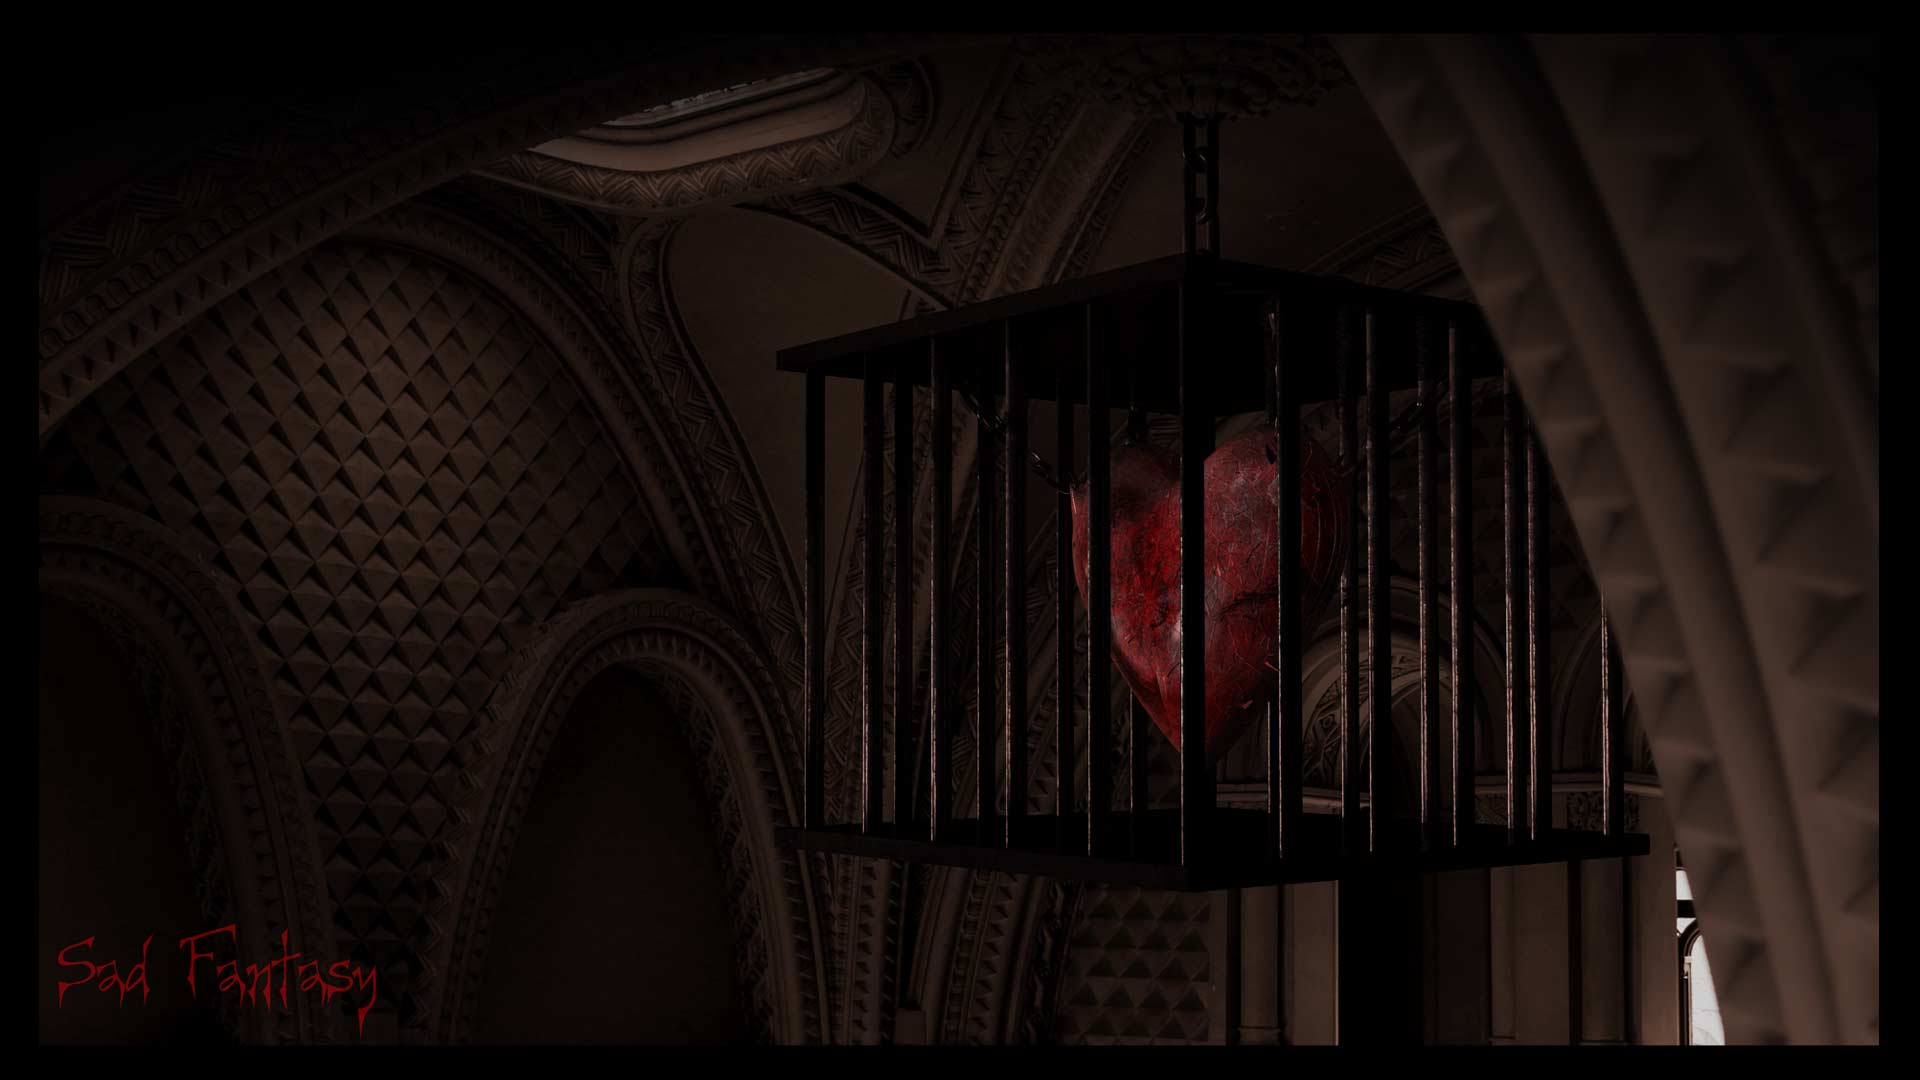 heart in a cage, broken heart series by Sad Fantasy